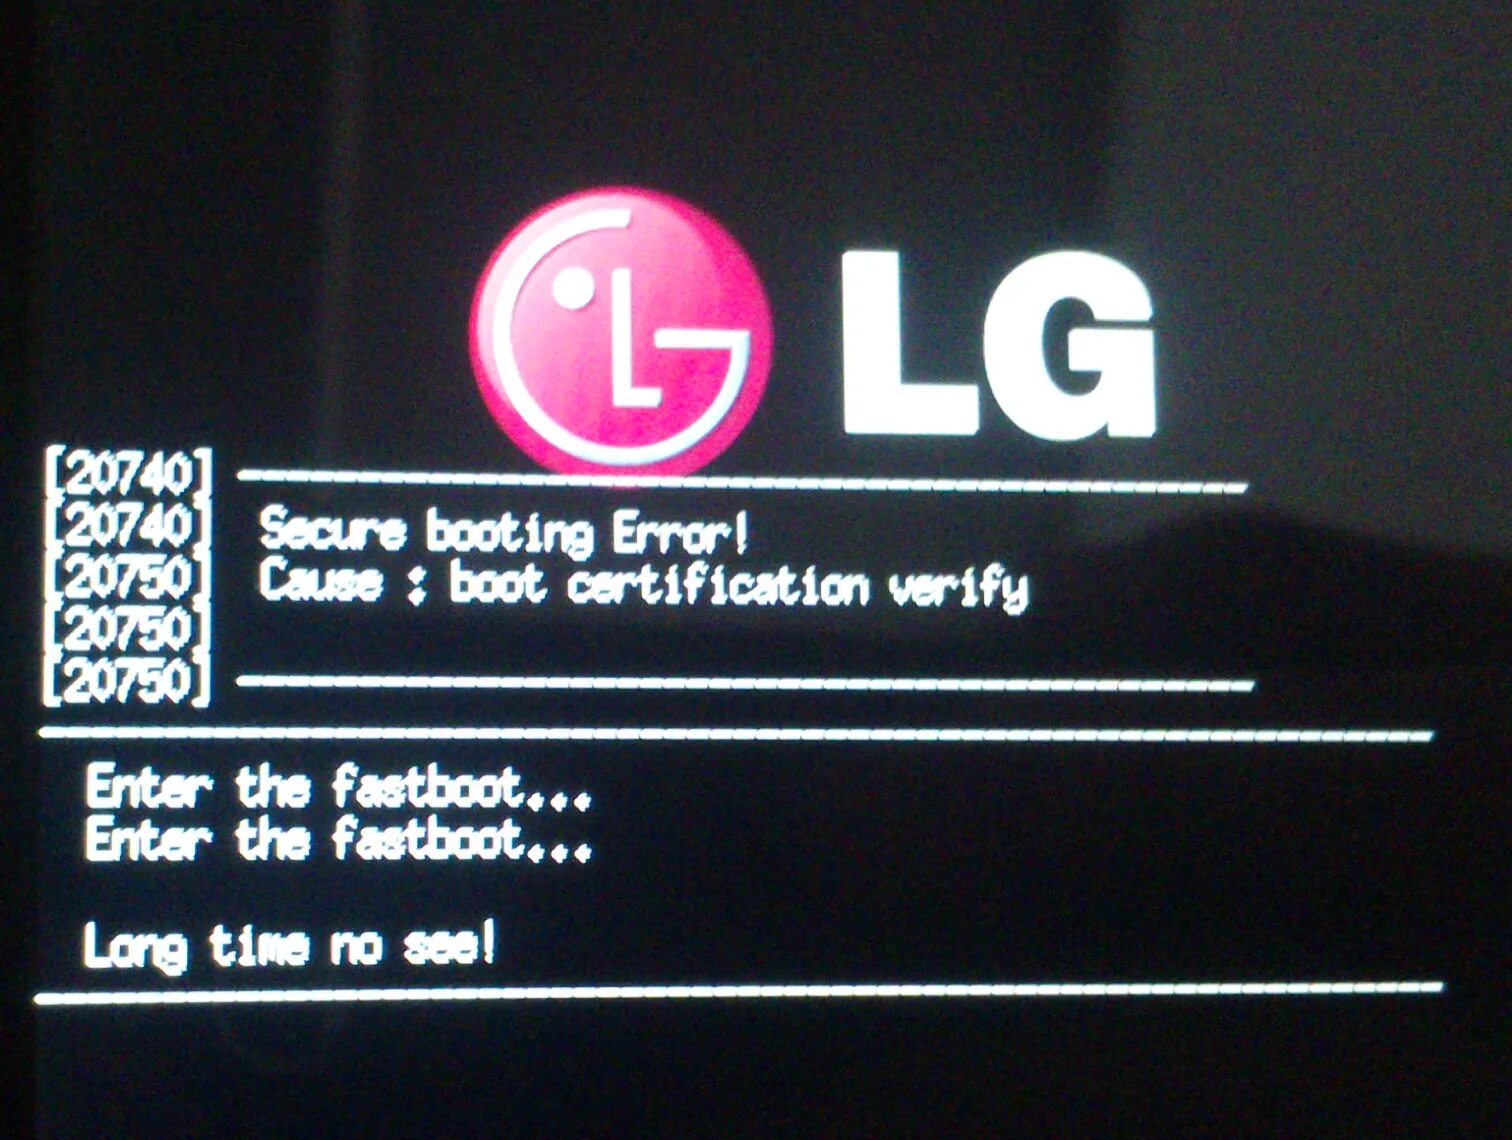 Error: Boot Certification verify LG. LG 120l Security booting Error cause Boot Certification. DS ошибка LG. Ошибка Boot image verify.